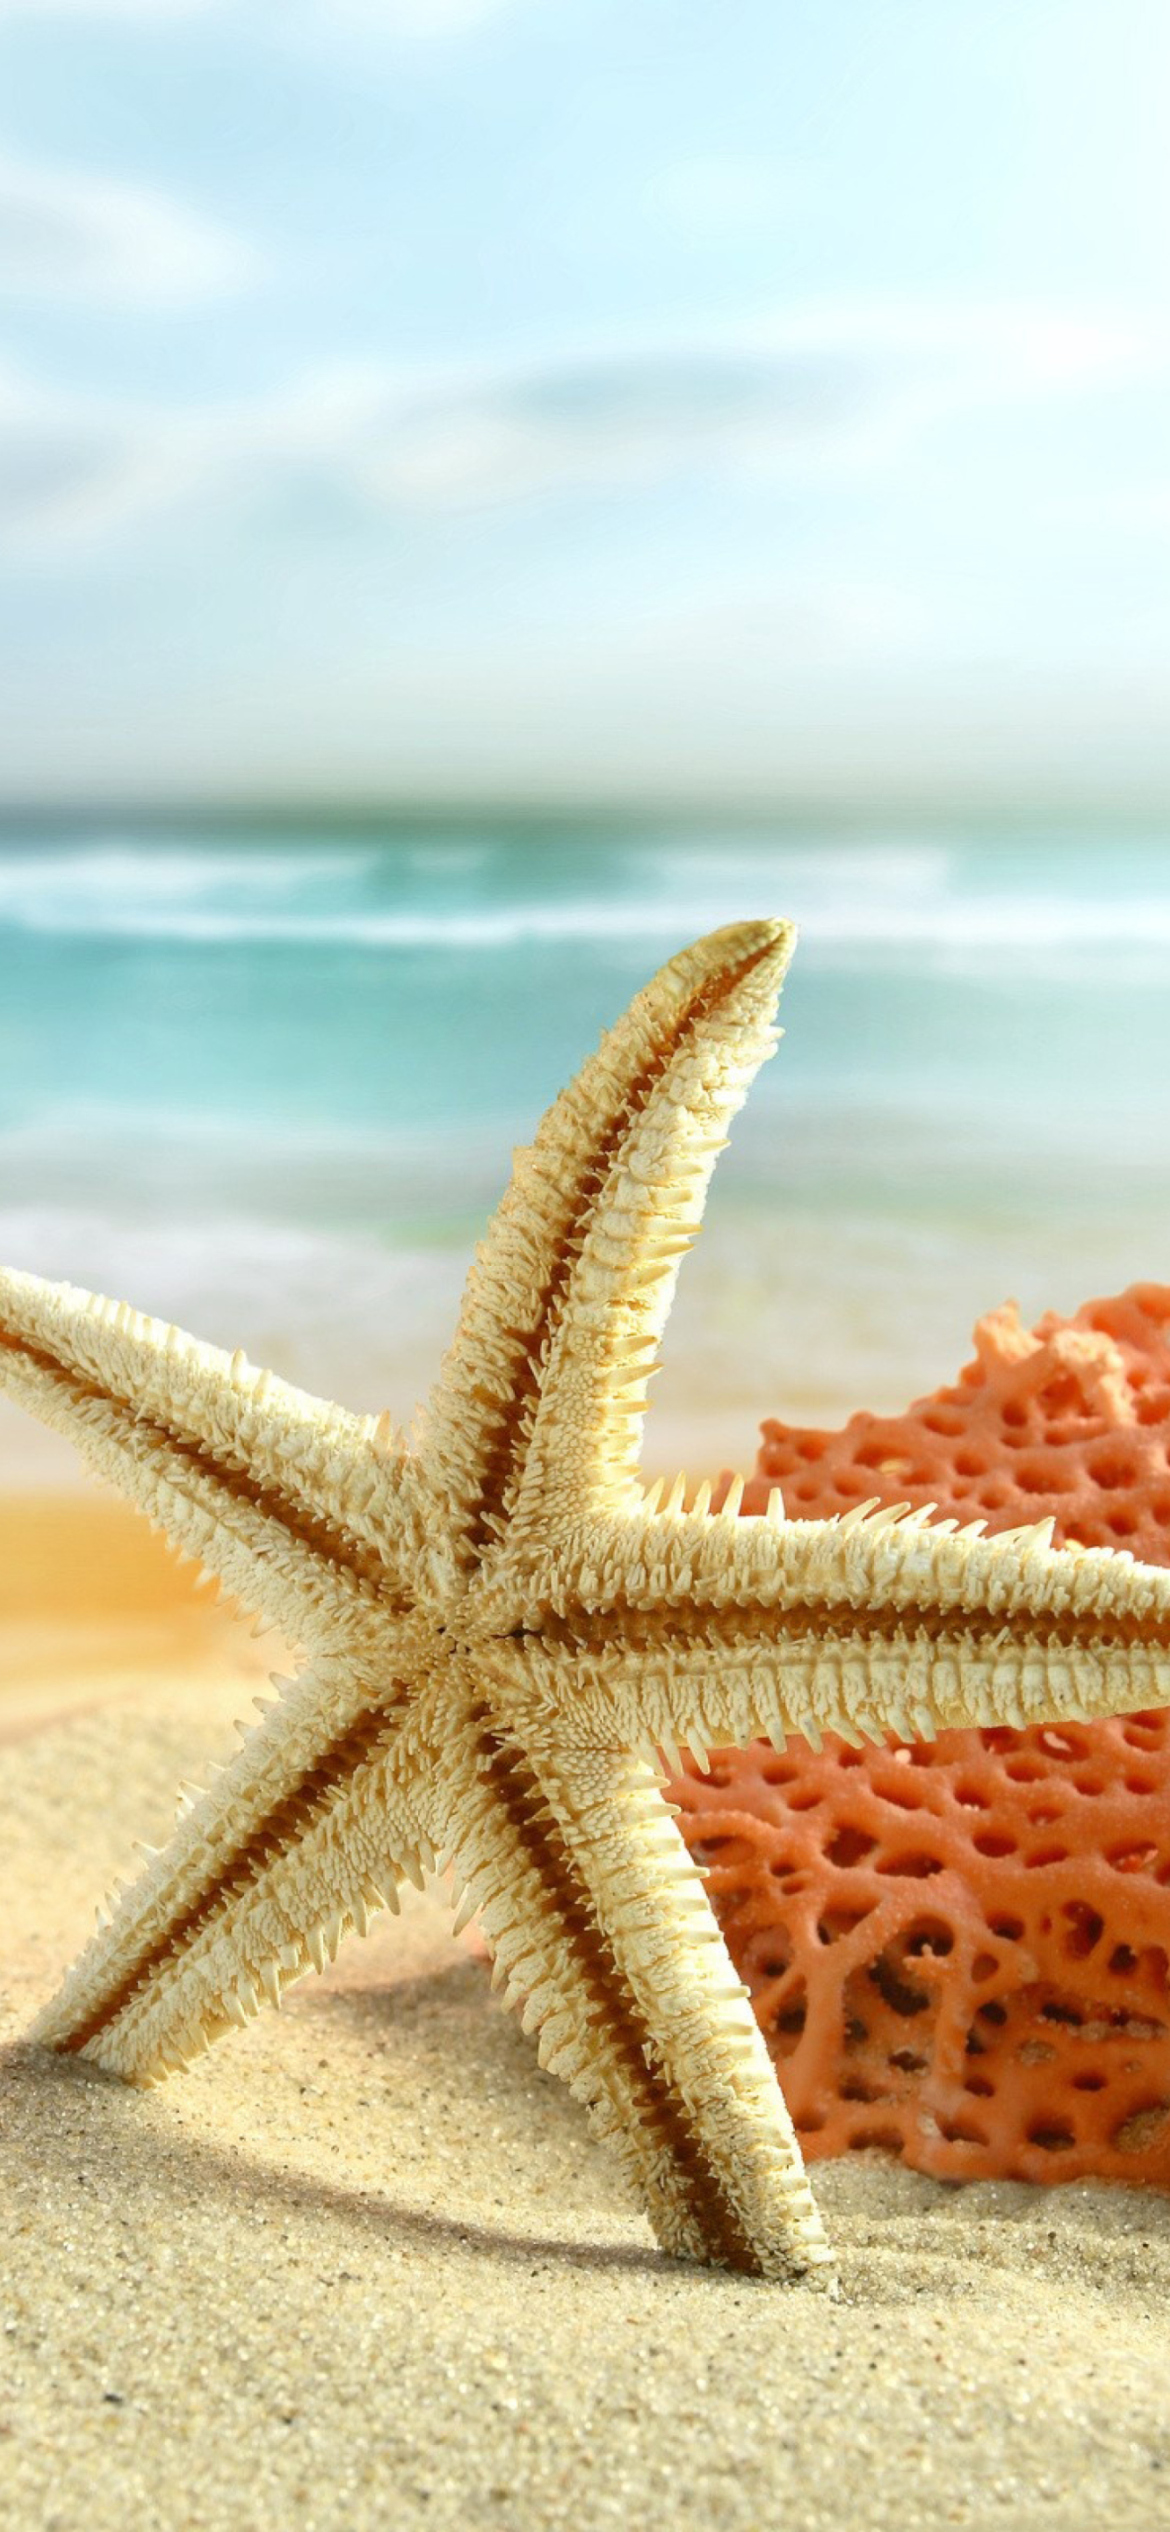 Starfish On Beach wallpaper 1170x2532